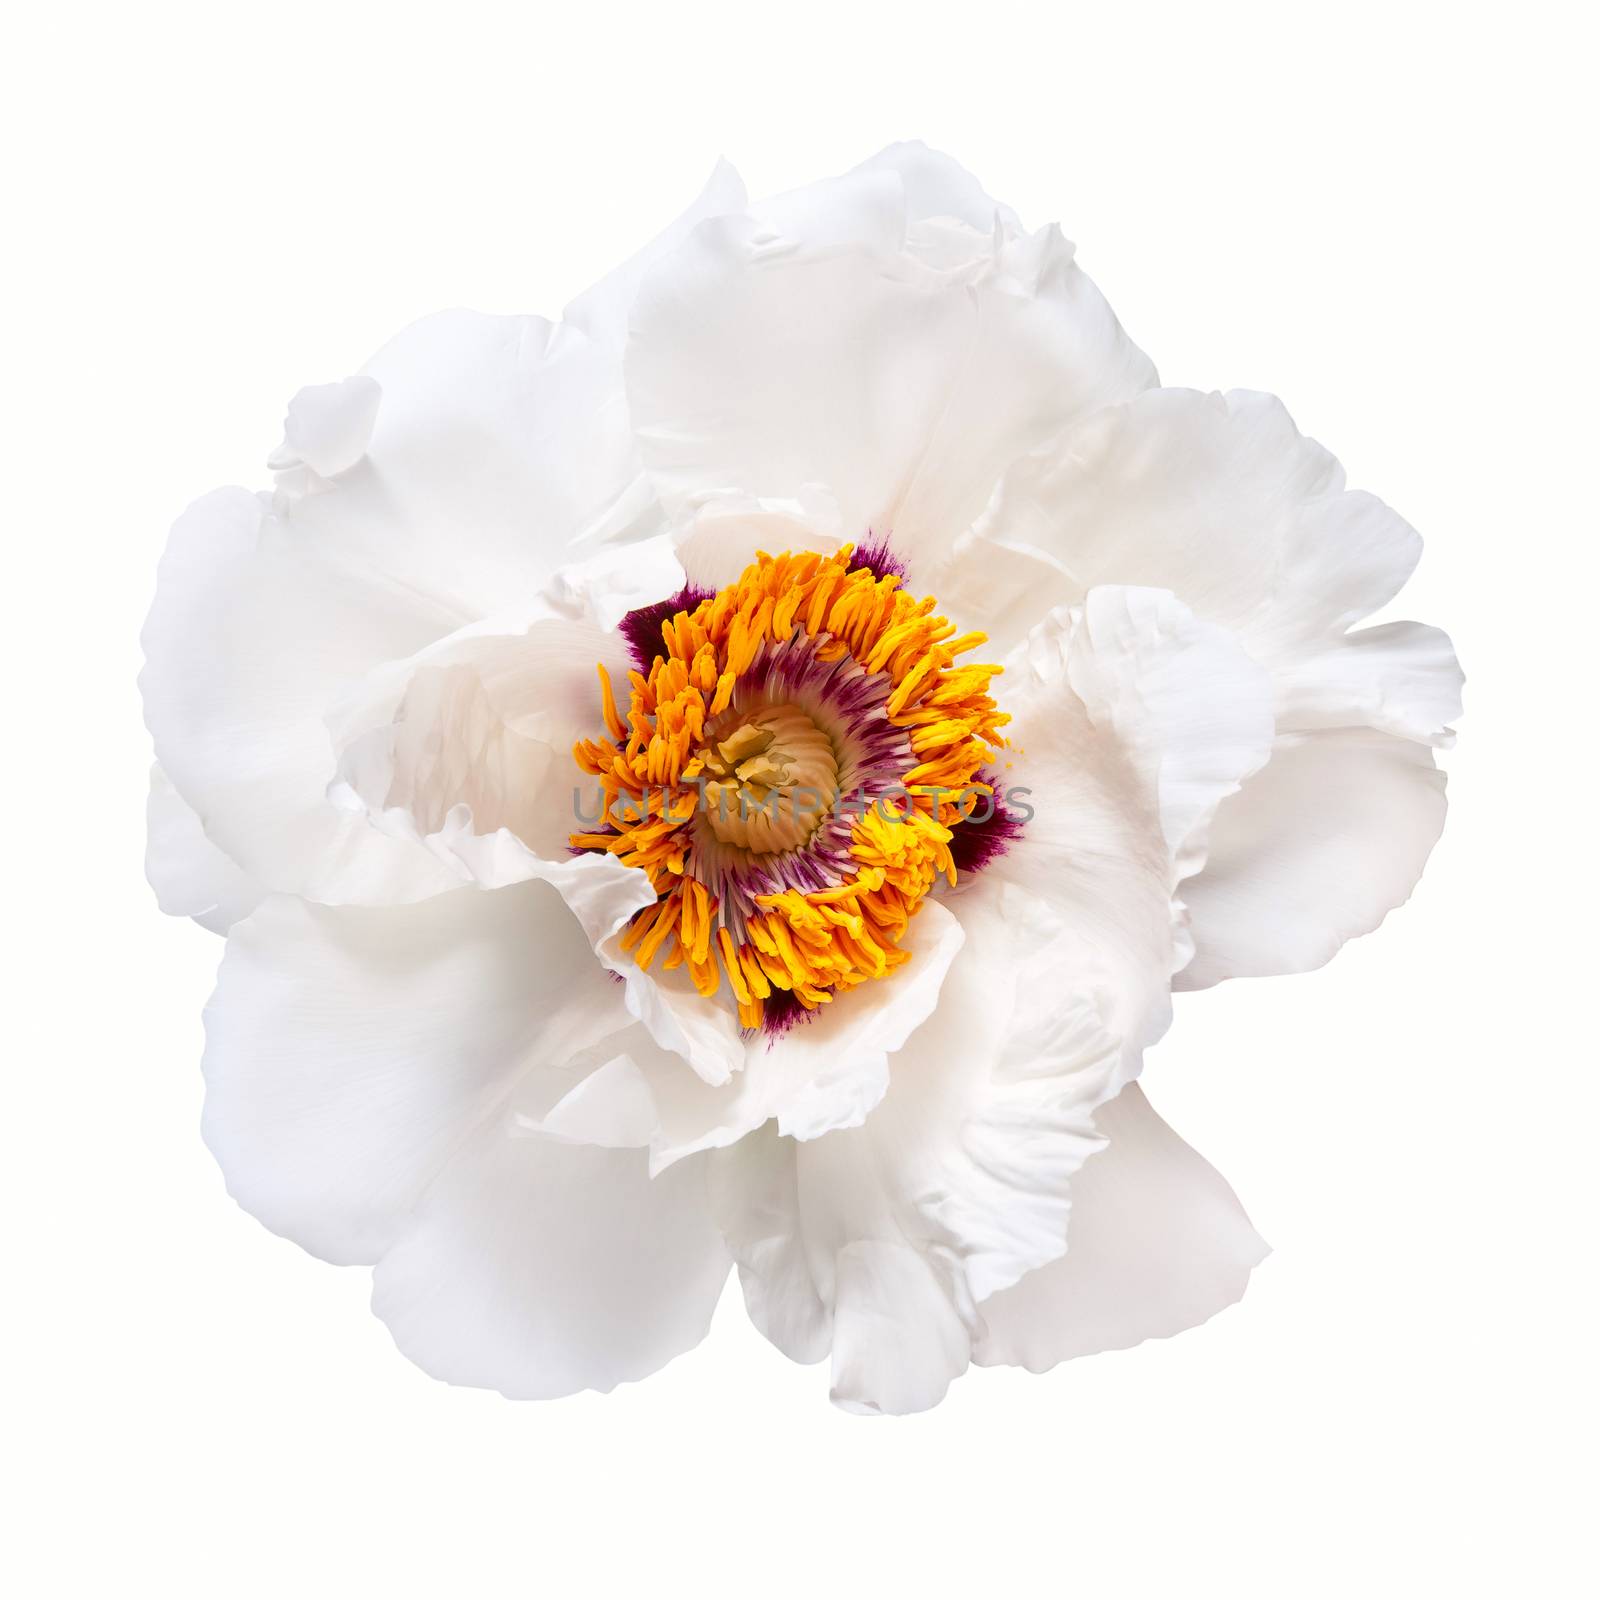 White peony flower isolated on white background, spa aroma